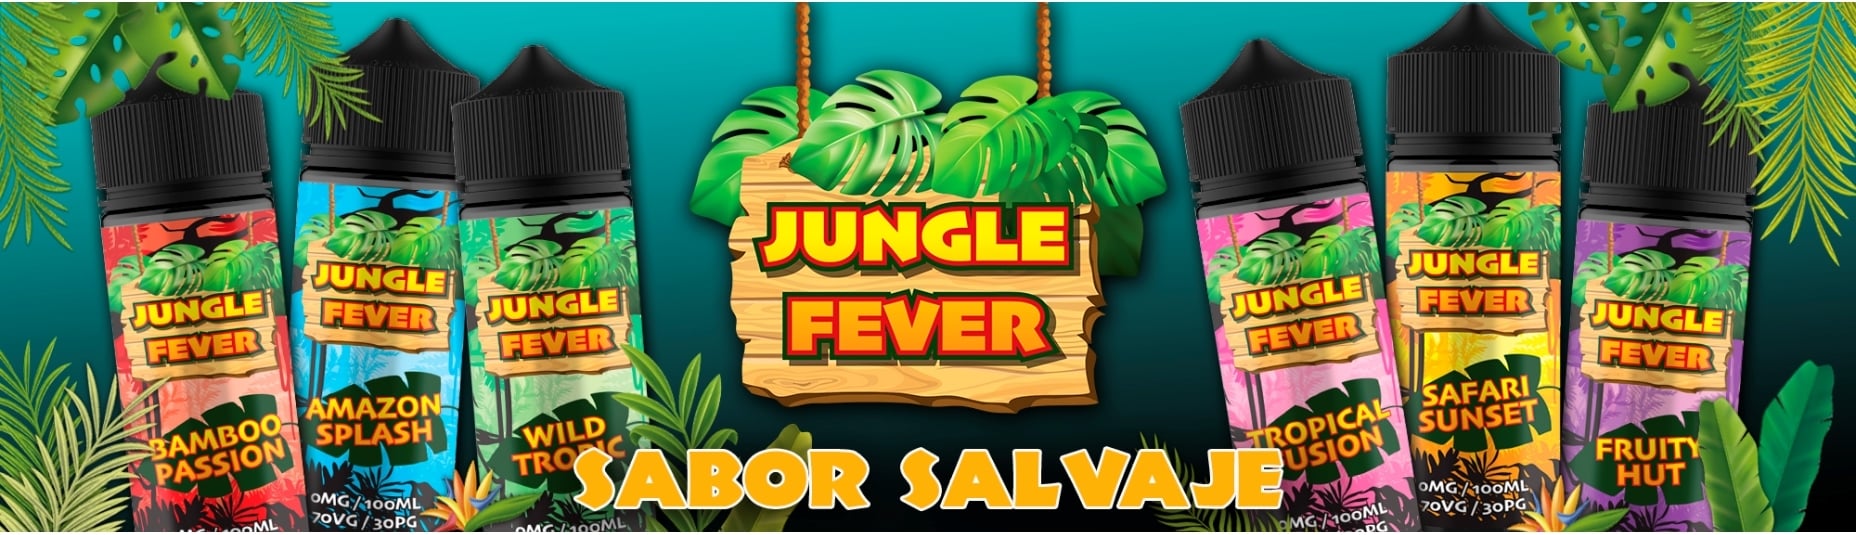 Aroma Wild Tropic - Jungle Fever 20ml